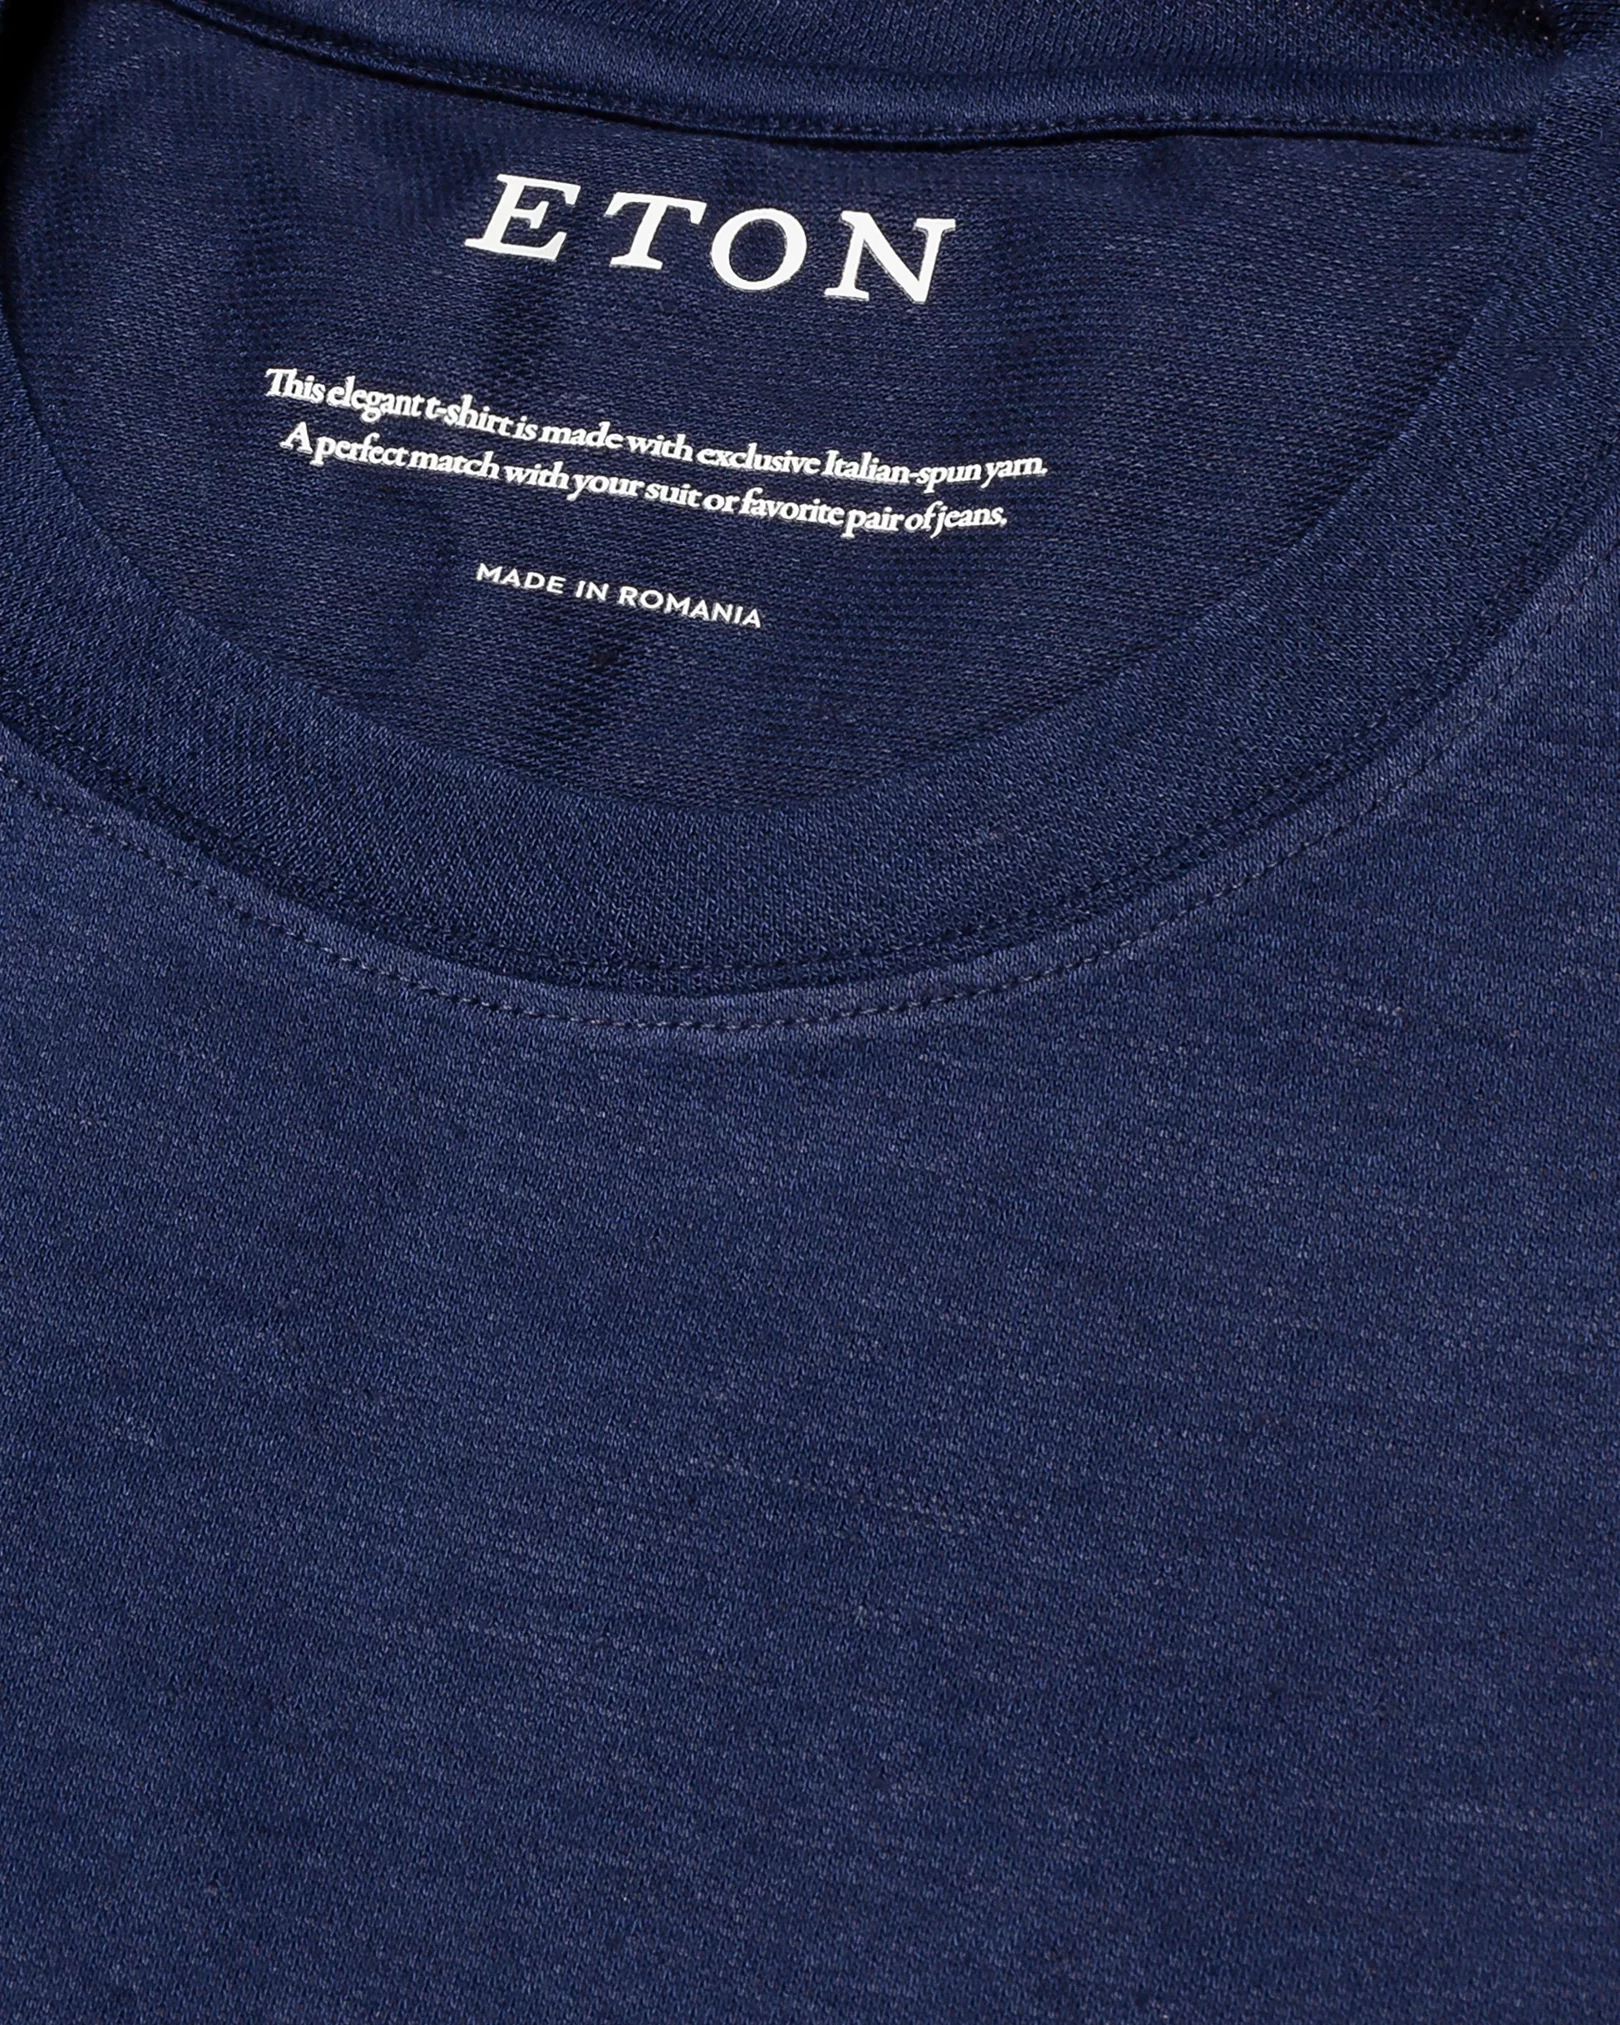 Eton - navy blue pique t shirt short sleeve boxfit t shirt